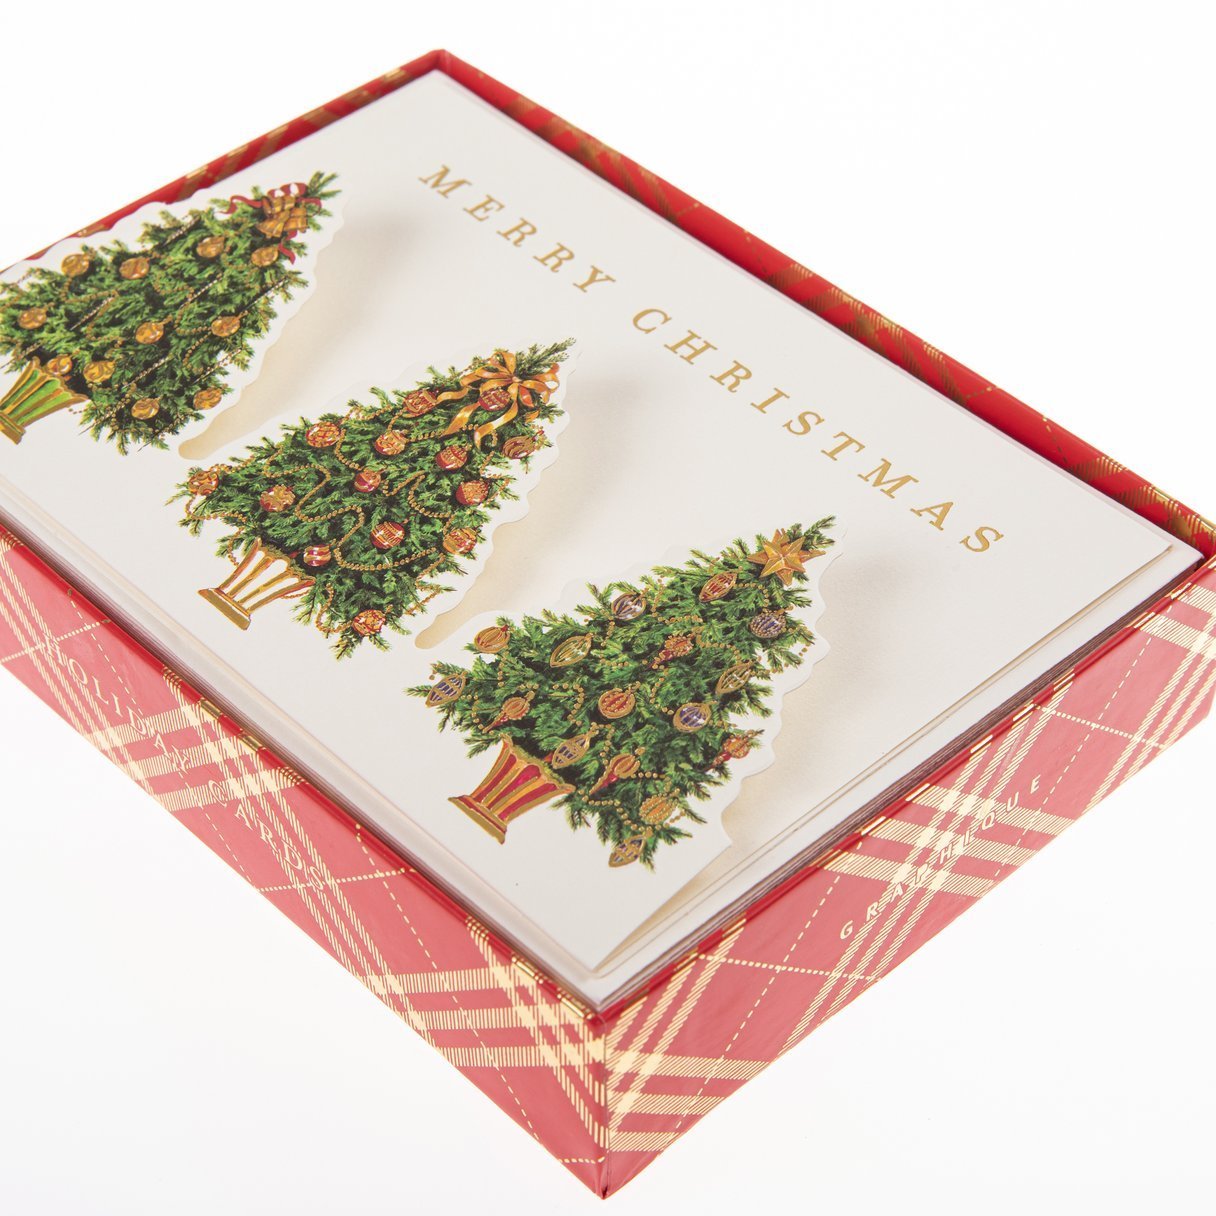 Christmas Tree Trio Large Boxed Cards - Royalties